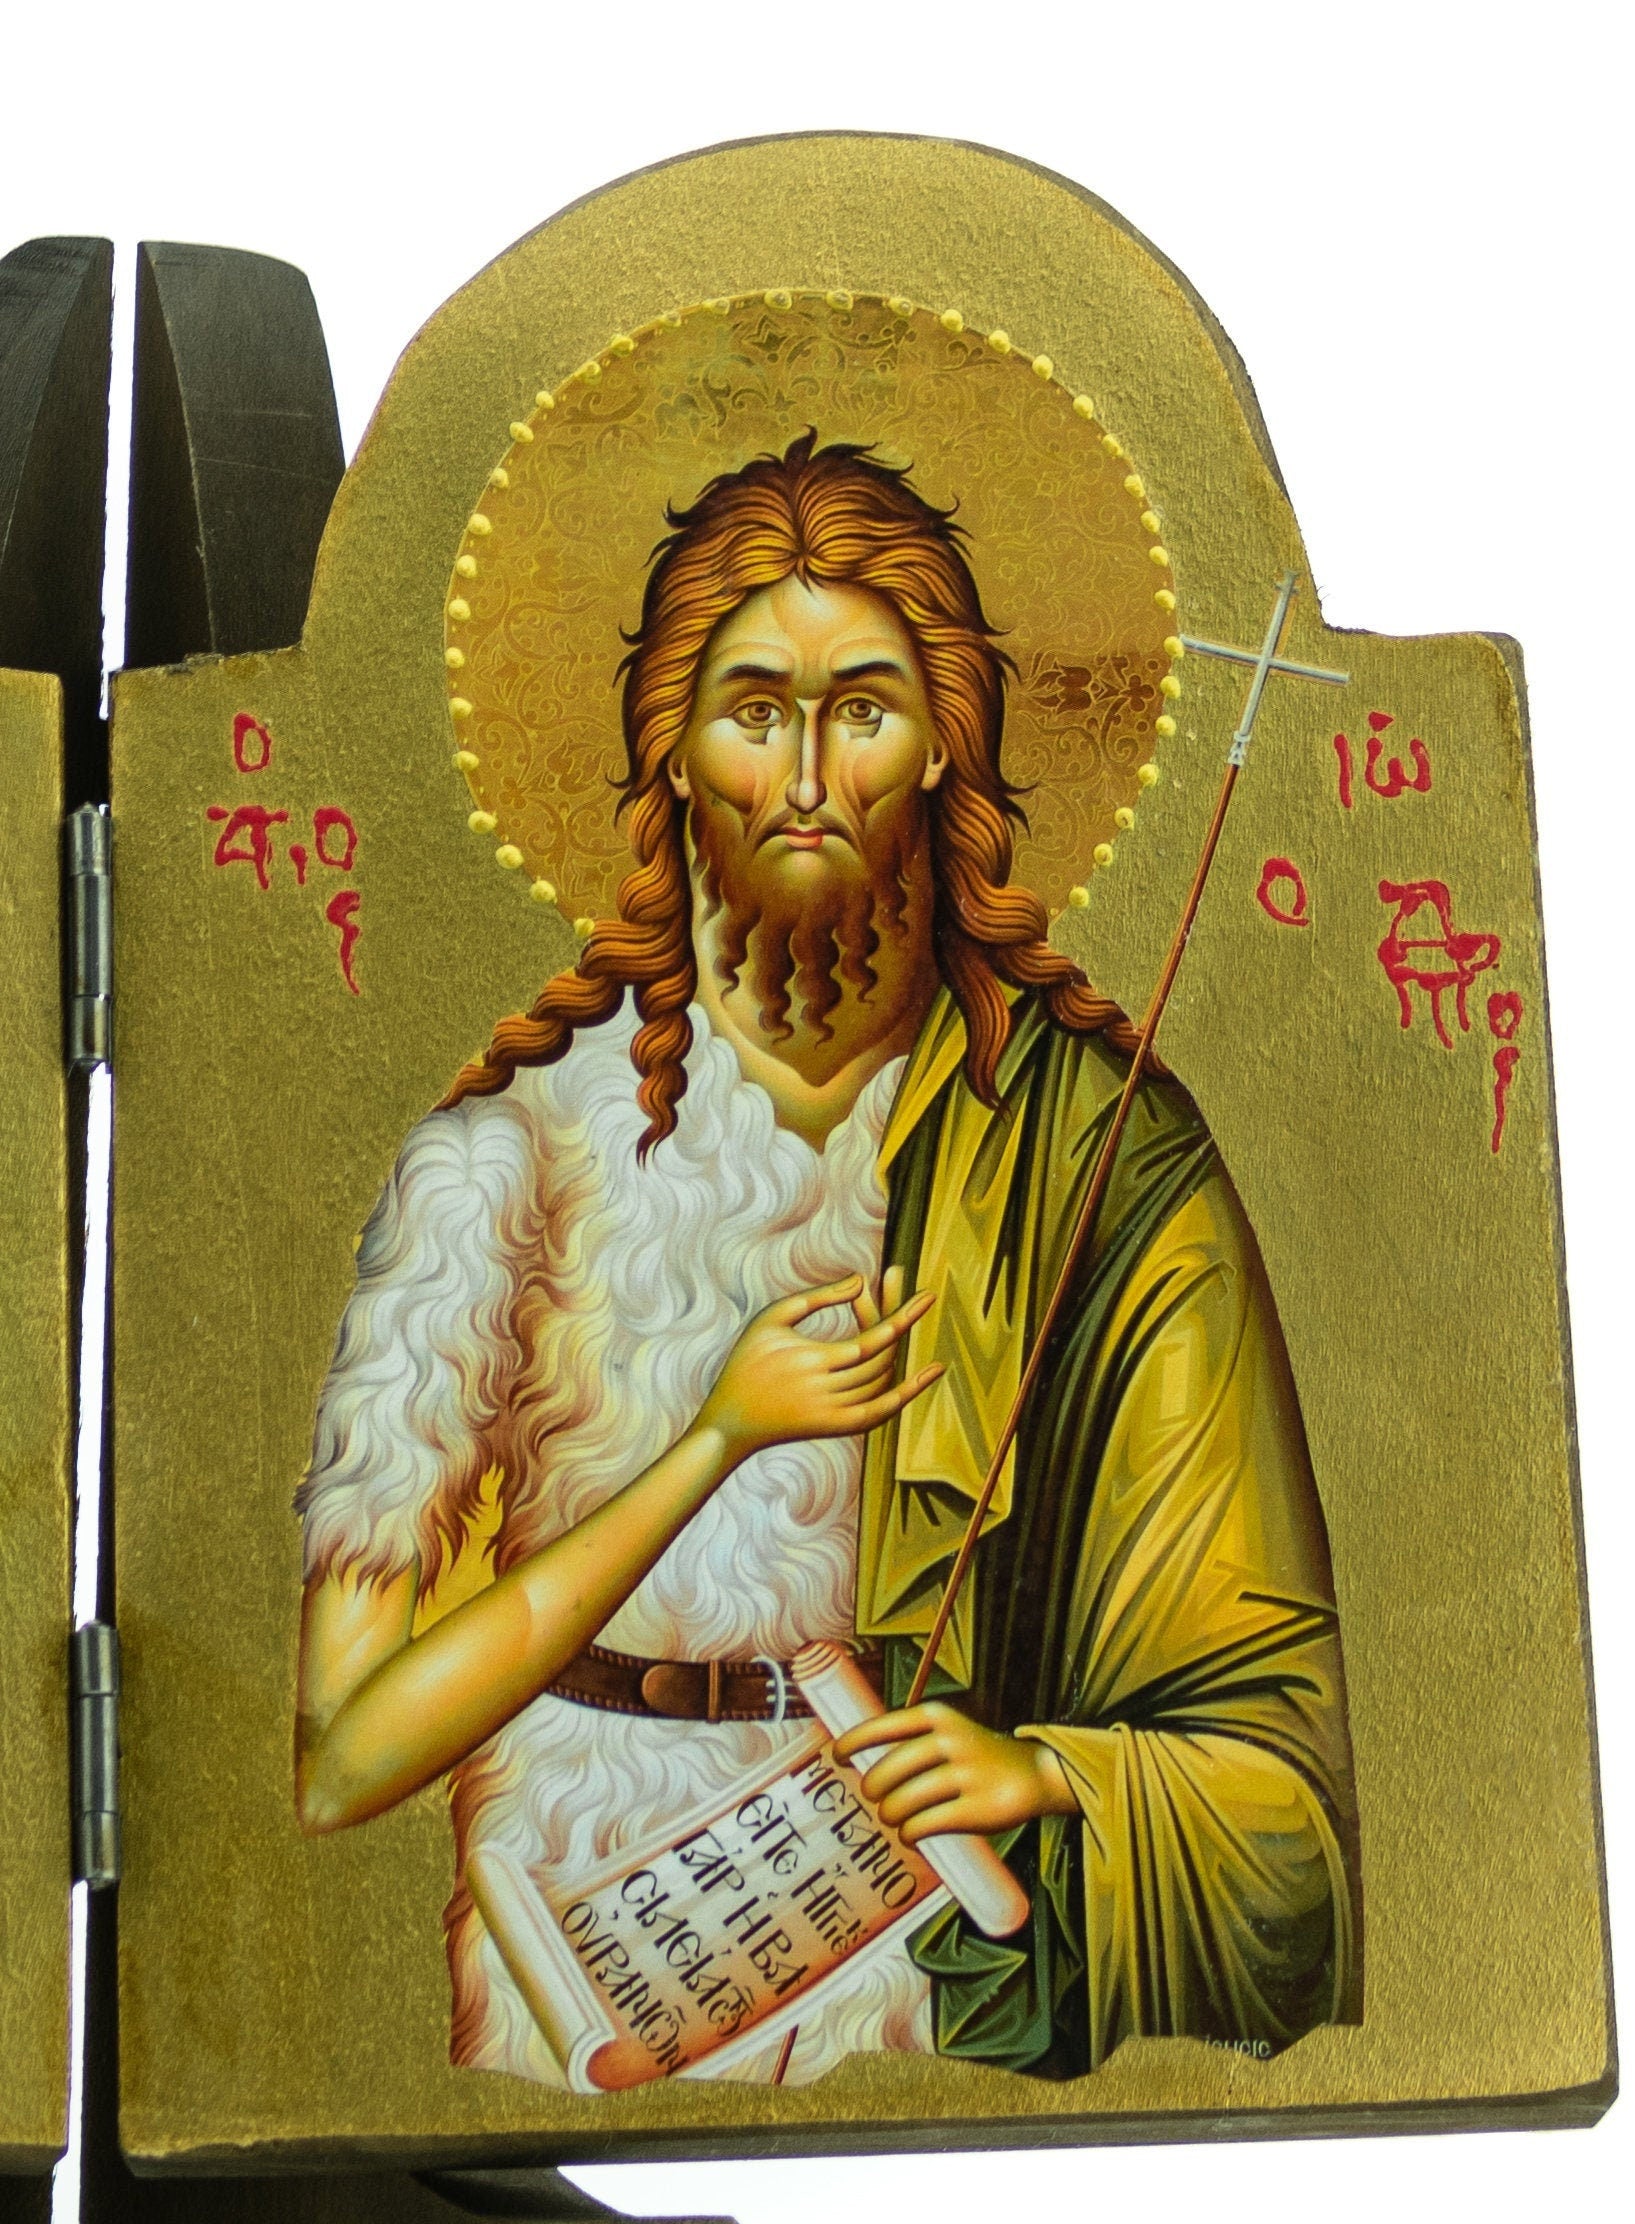 Virgin Mary icon & Saint John icon diptych, Mother of God Orthodox icon, Greek Handmade icon, Byzantine icon, wedding gift ideas 20x14cm TheHolyArt